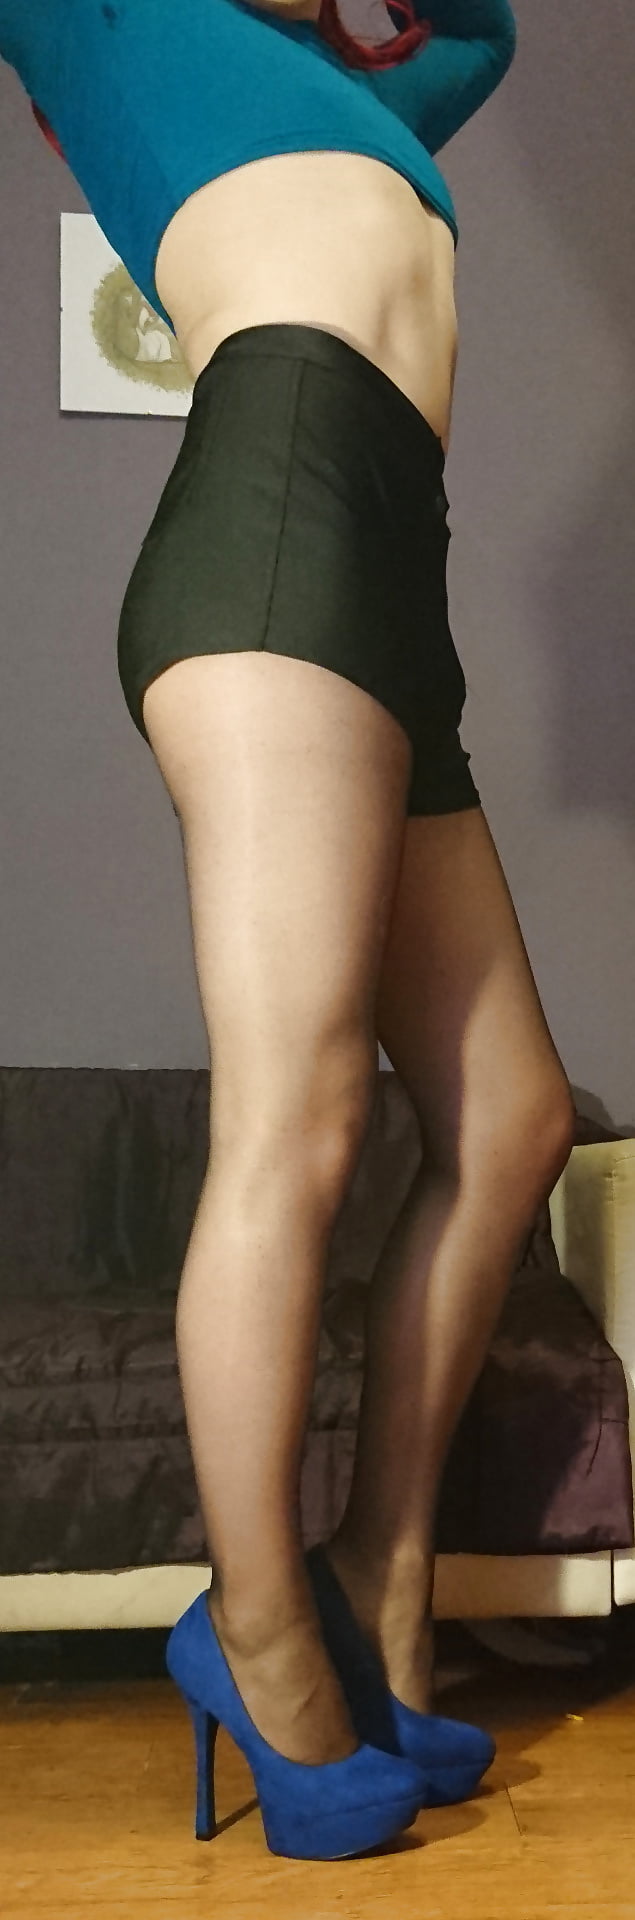 Marie crossdresser in sheer pantyhose and black shorts #106967127